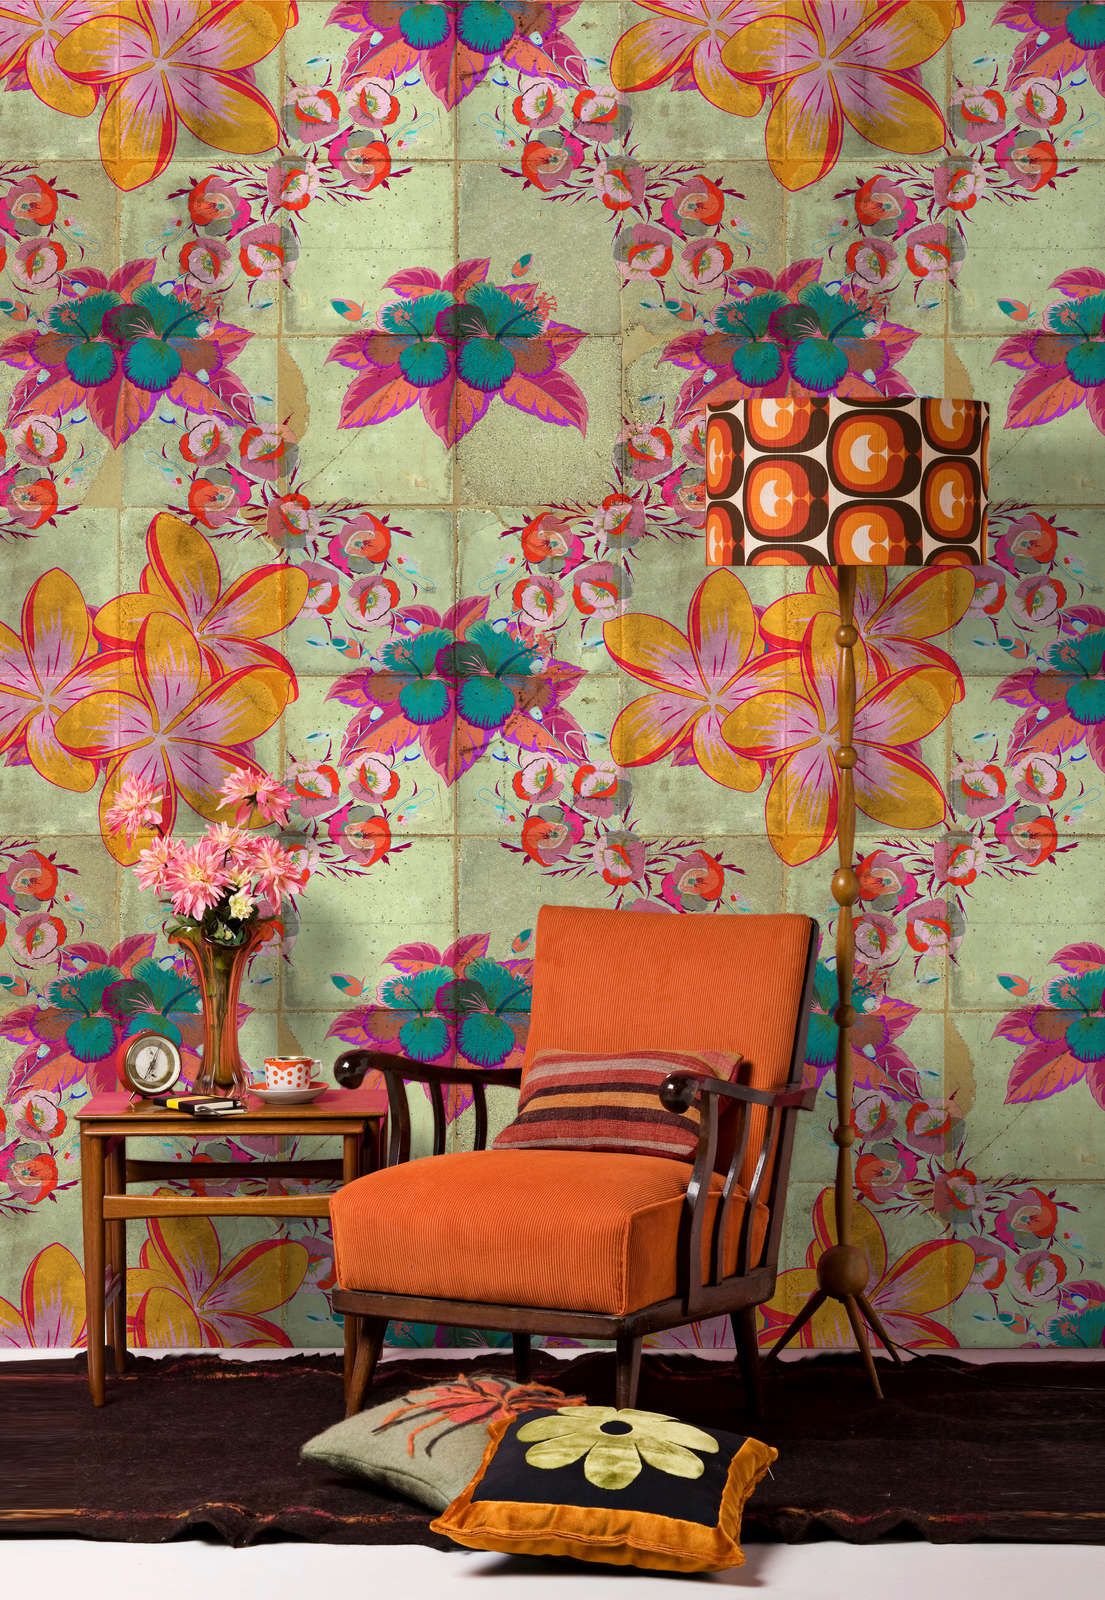             Photo wallpaper »jolie« - Flower design with kaleidoscope effect on concrete tile structure - Matt, smooth non-woven fabric
        